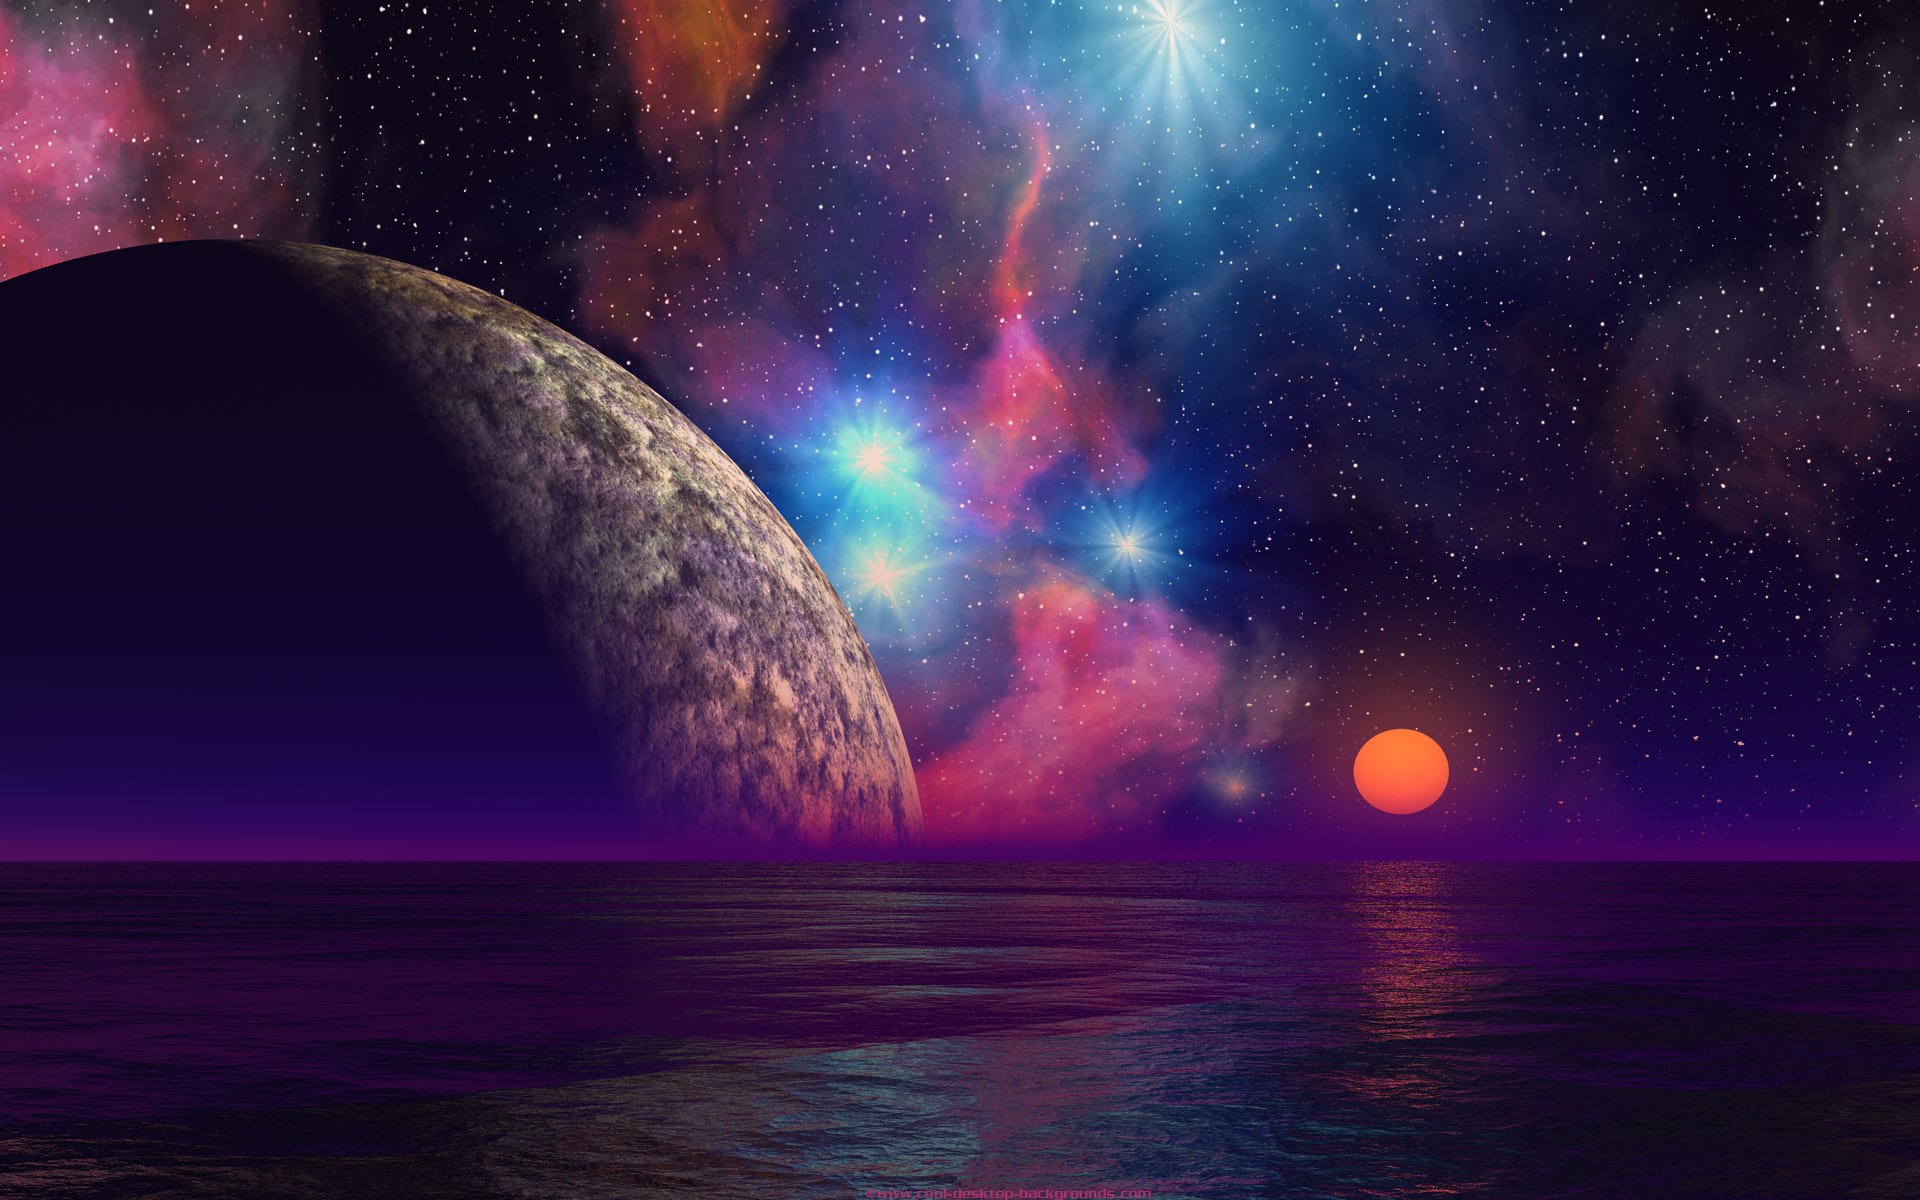  alien sunset backgrounds cool planets scifi desktop wallpaper 1920x1200